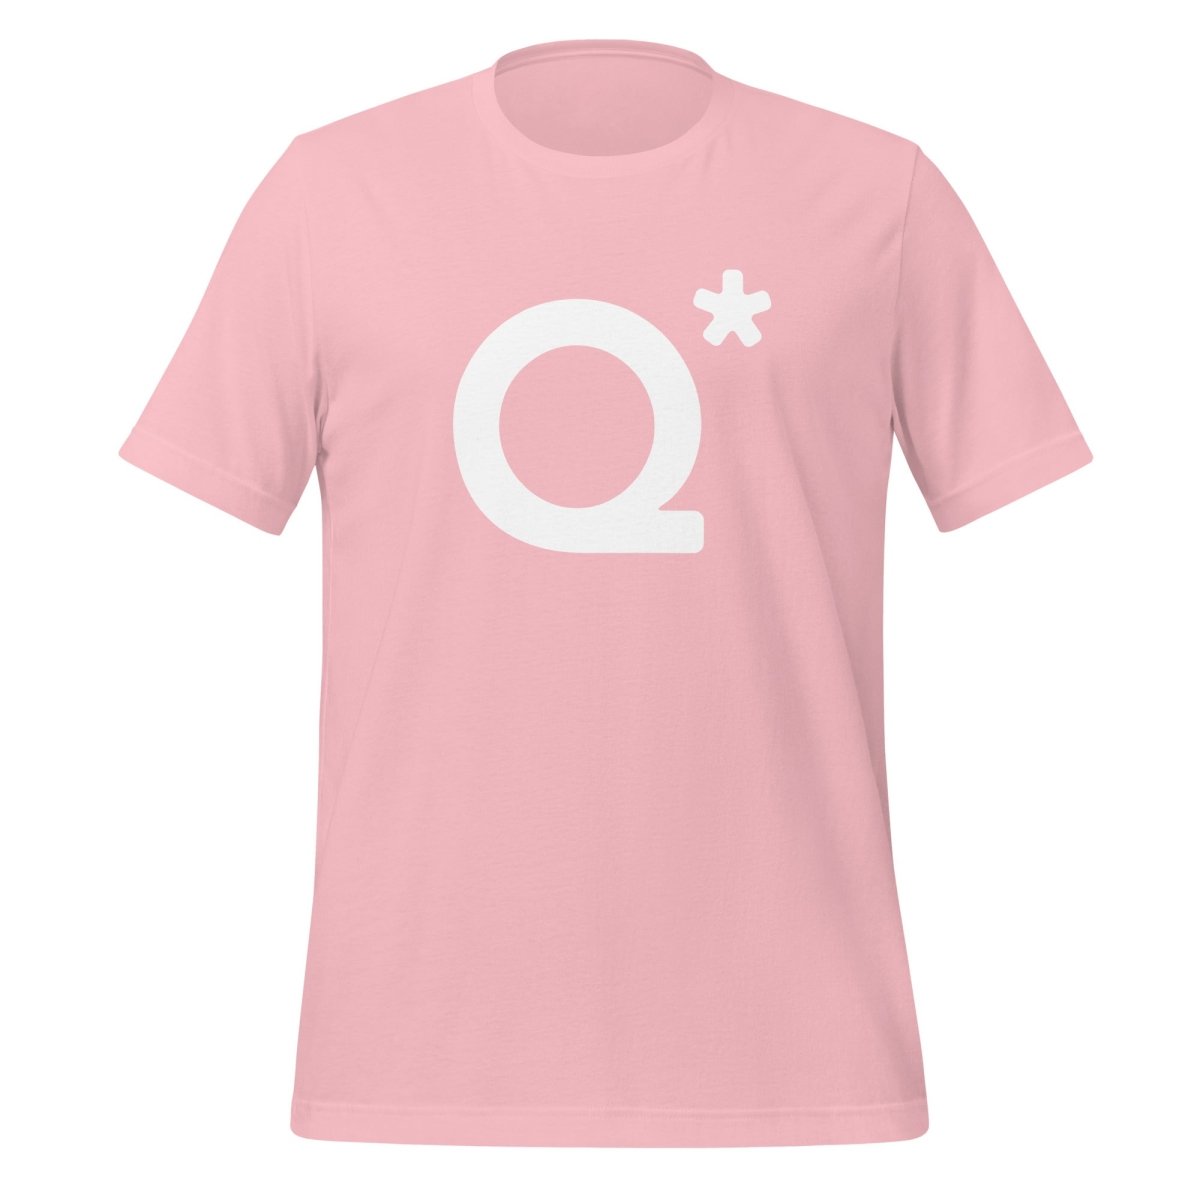 Q* (Q - Star) T - Shirt 1 (unisex) - Pink - AI Store